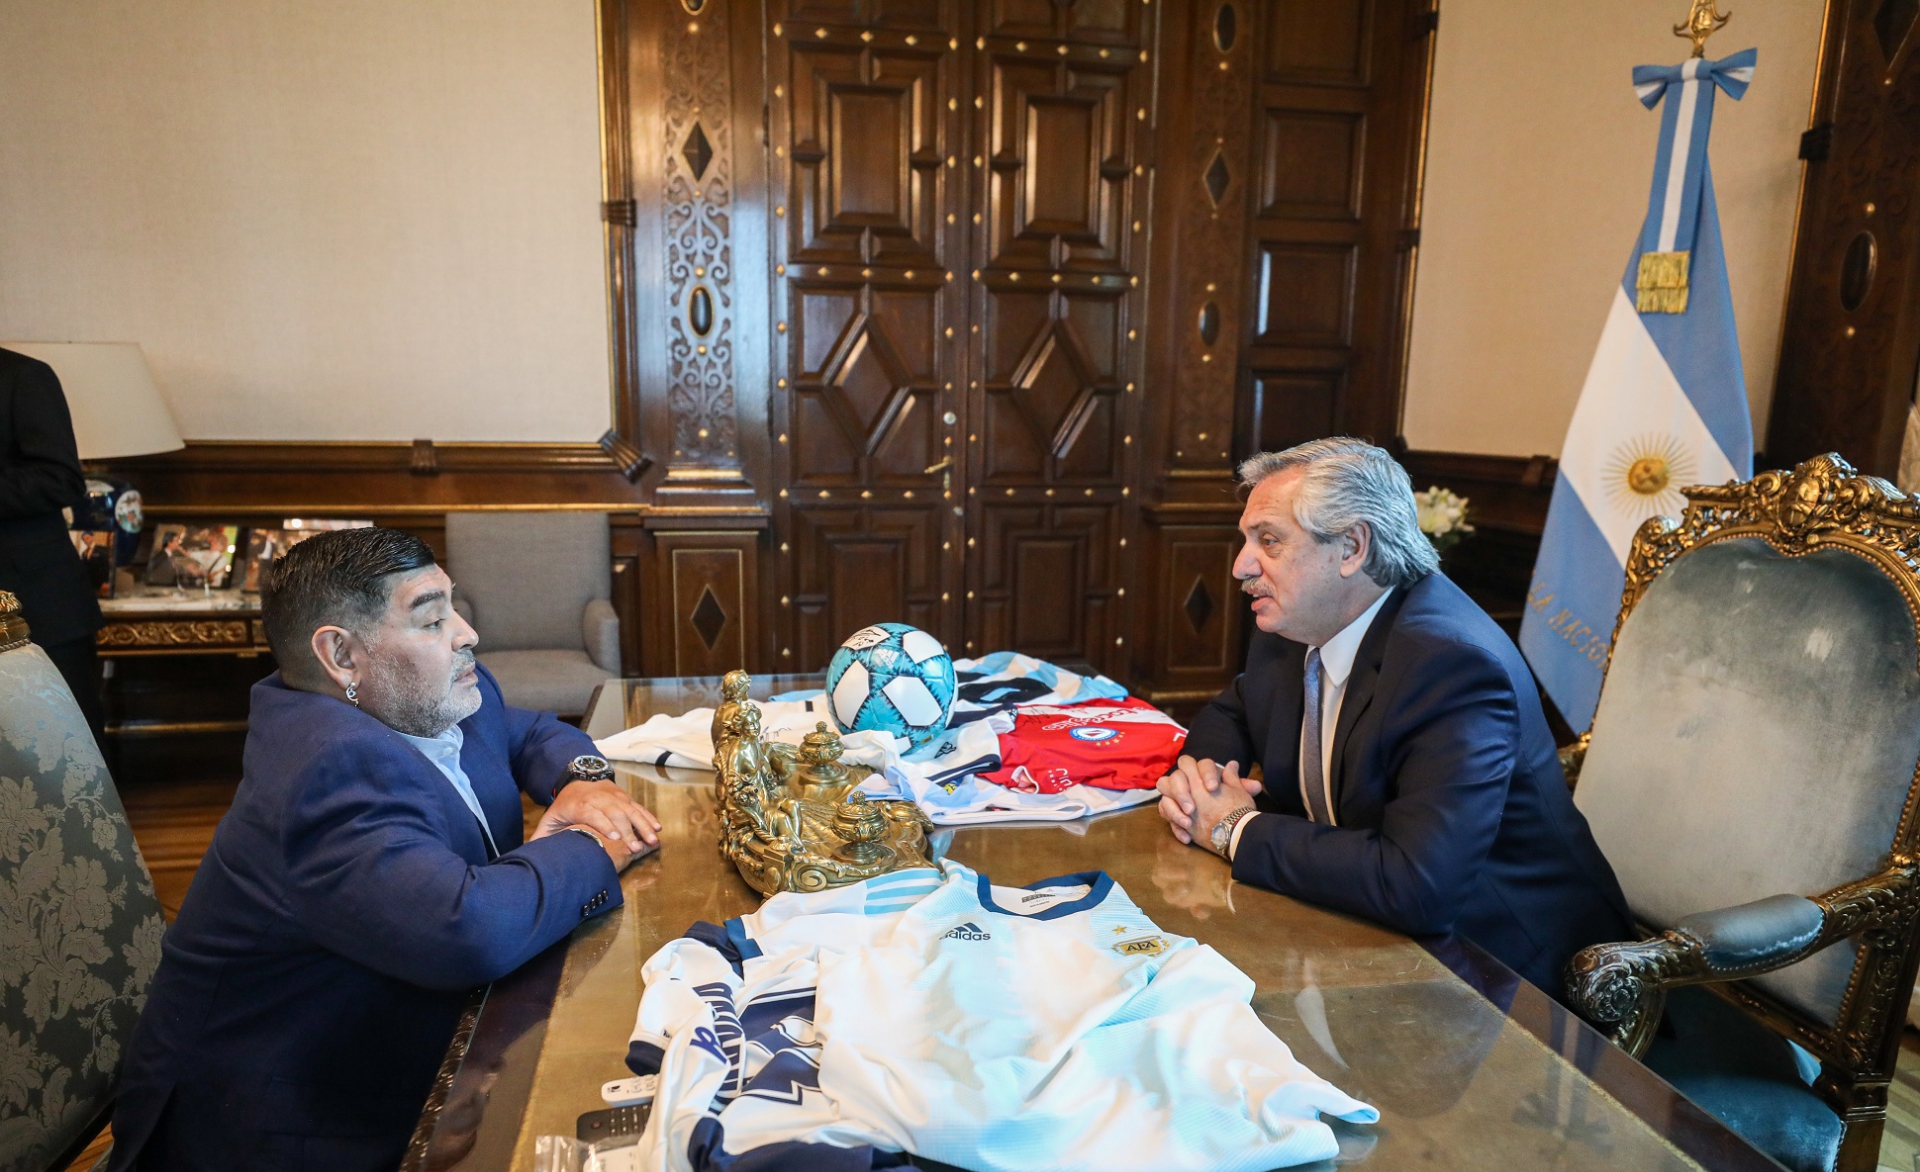 Fernández welcomes Diego Maradona to the Casa Rosada